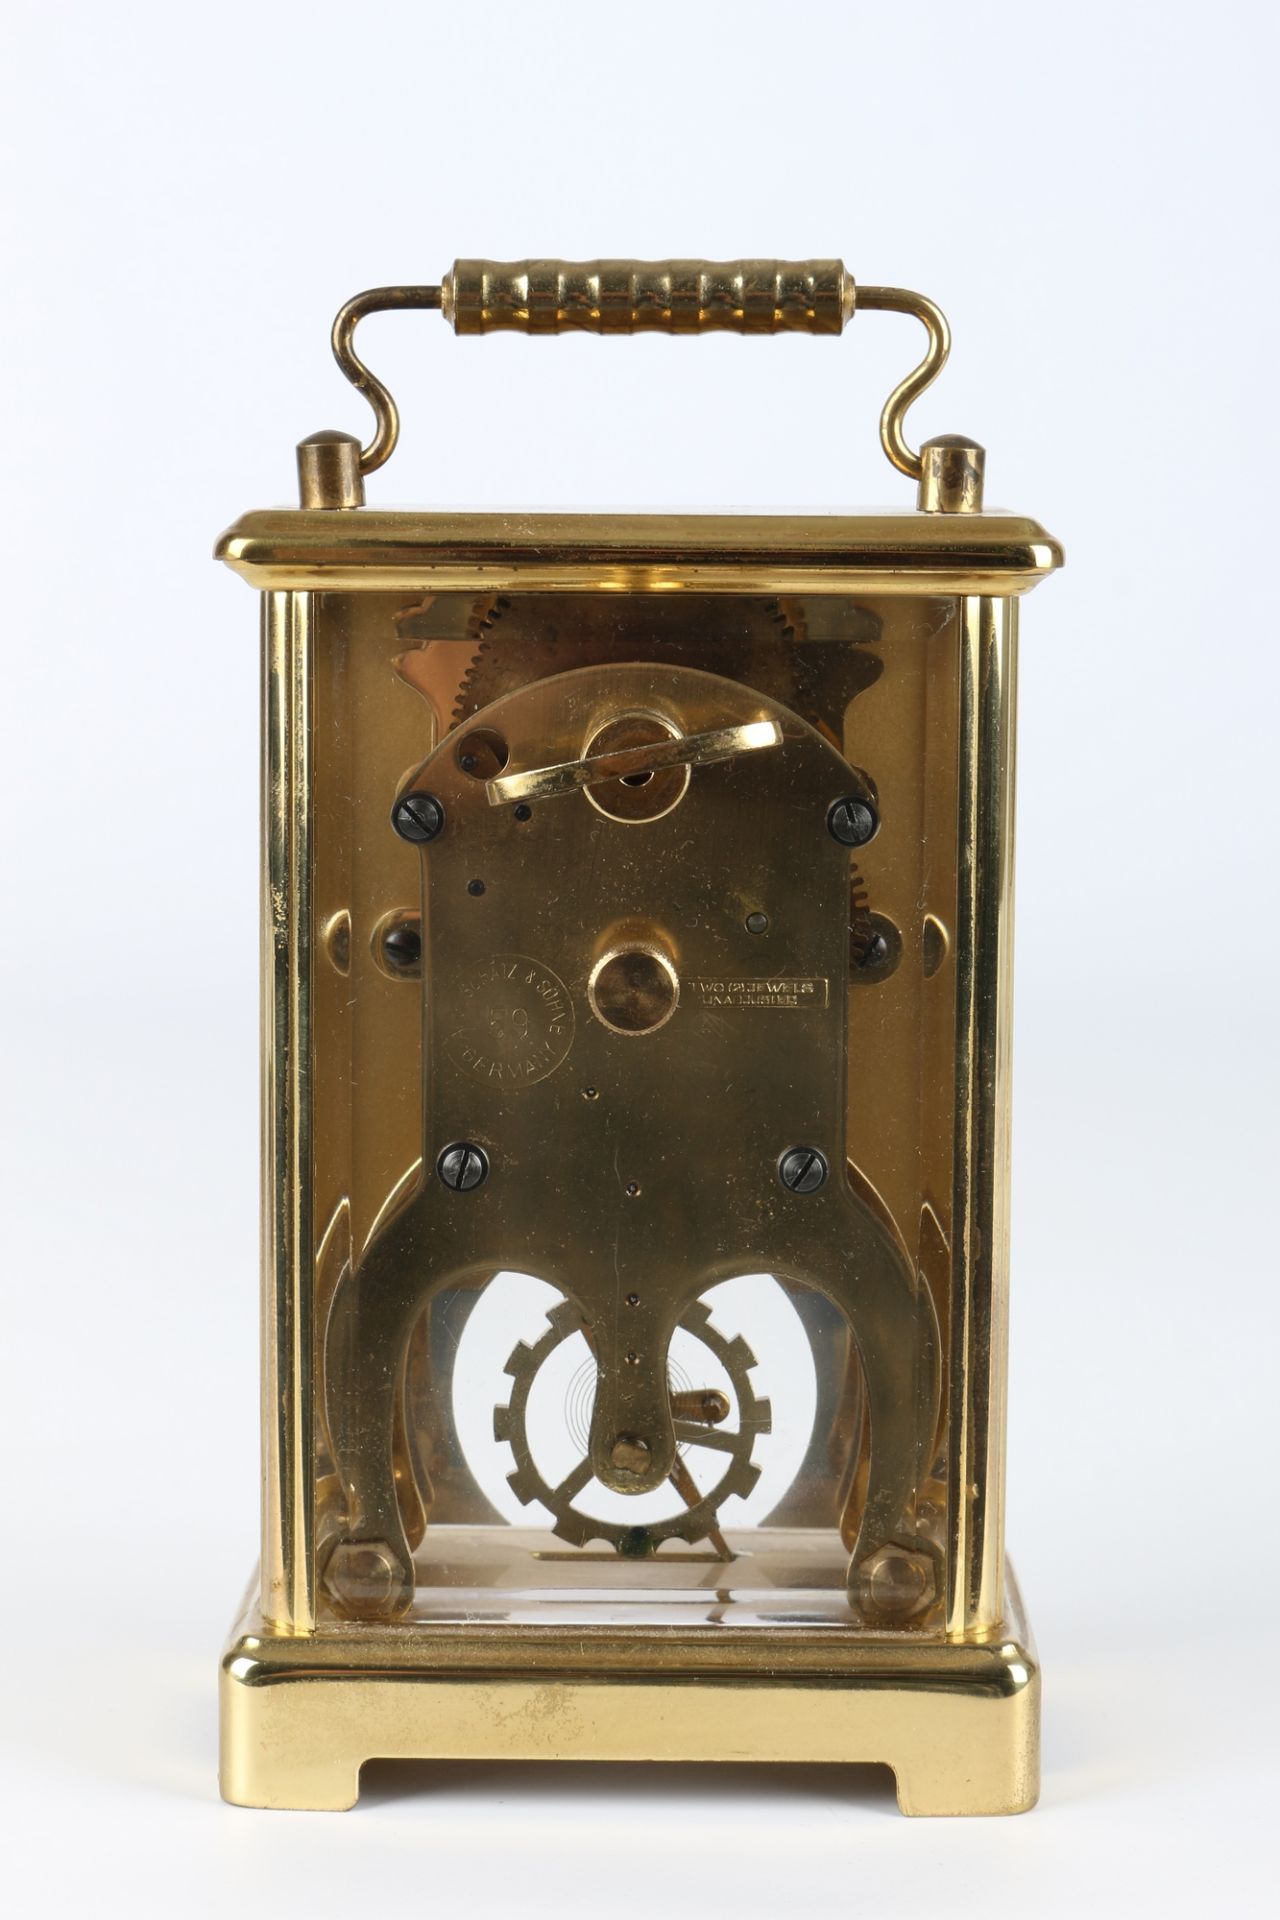 August Schatz Reiseuhr, carriage clock, - Image 4 of 5